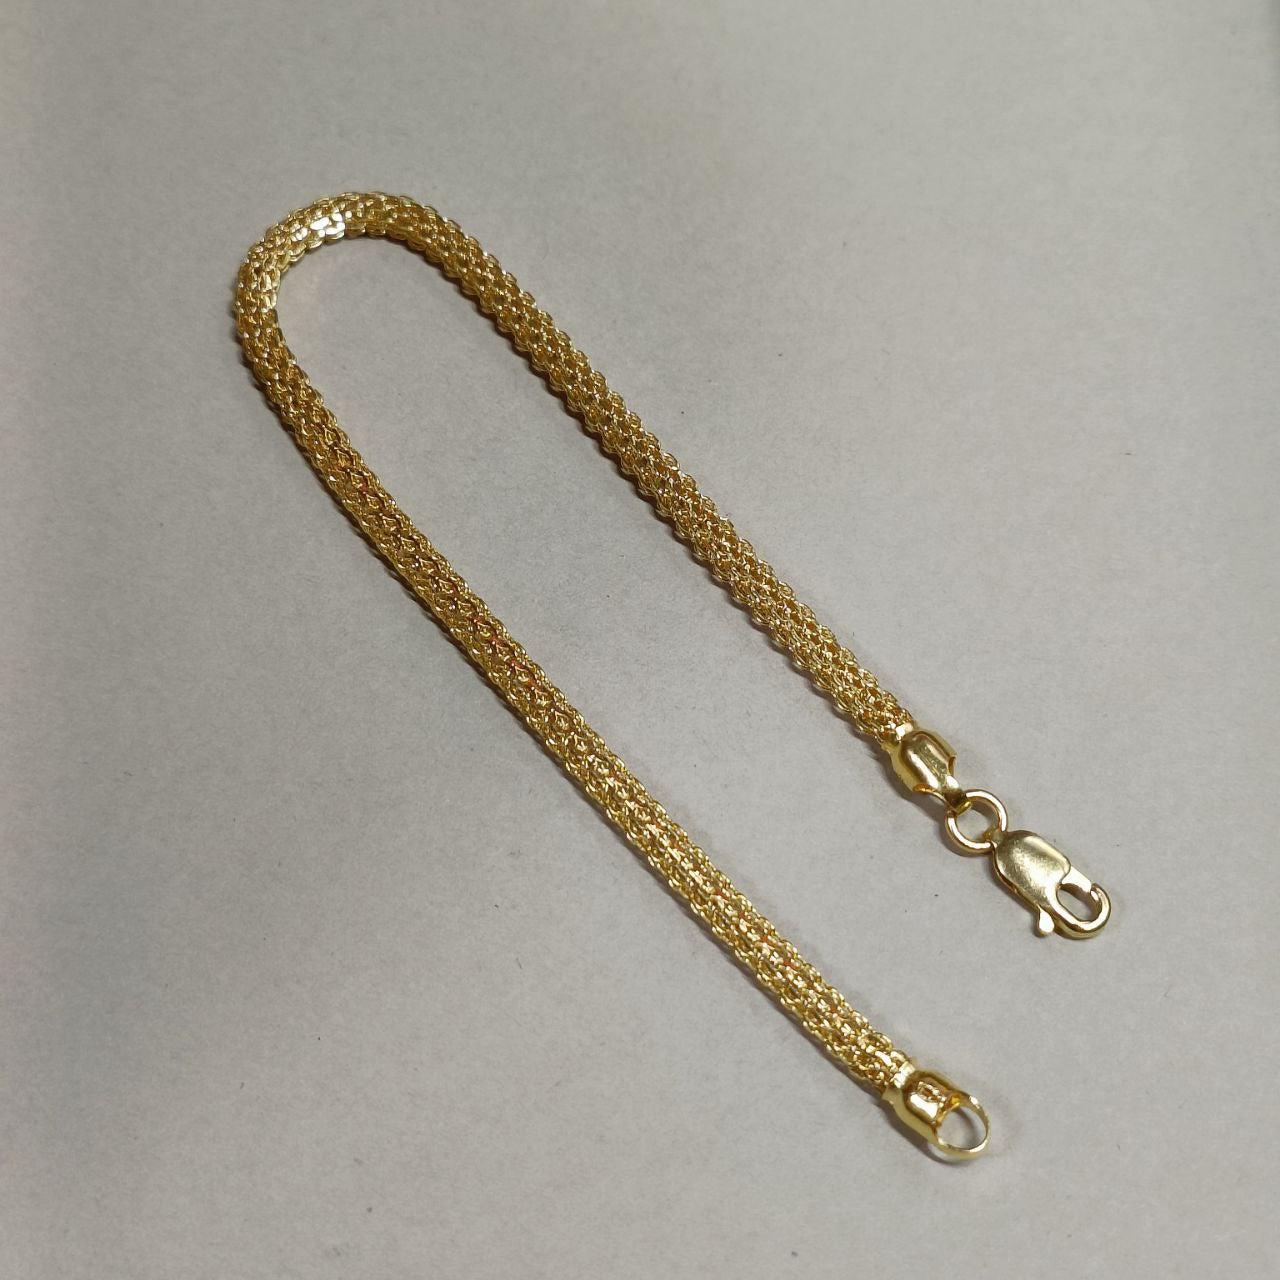 22k / 916 Gold Round Milan Bracelet-916 gold-Best Gold Shop